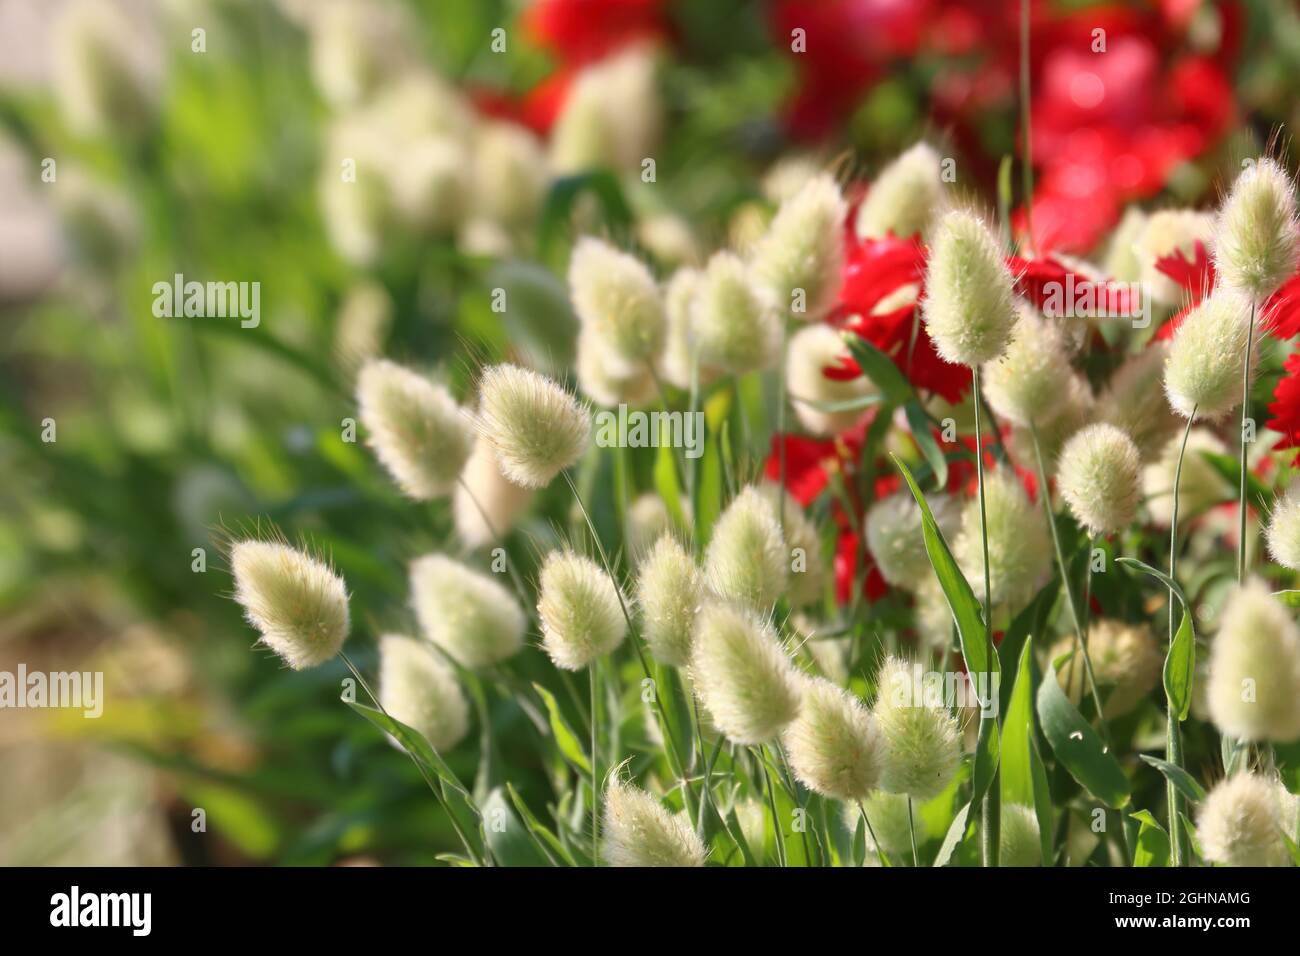 Hare’s tail grass/Bunnytail grass (Lagurus ovatus) the ornamental grass in warm day Stock Photo